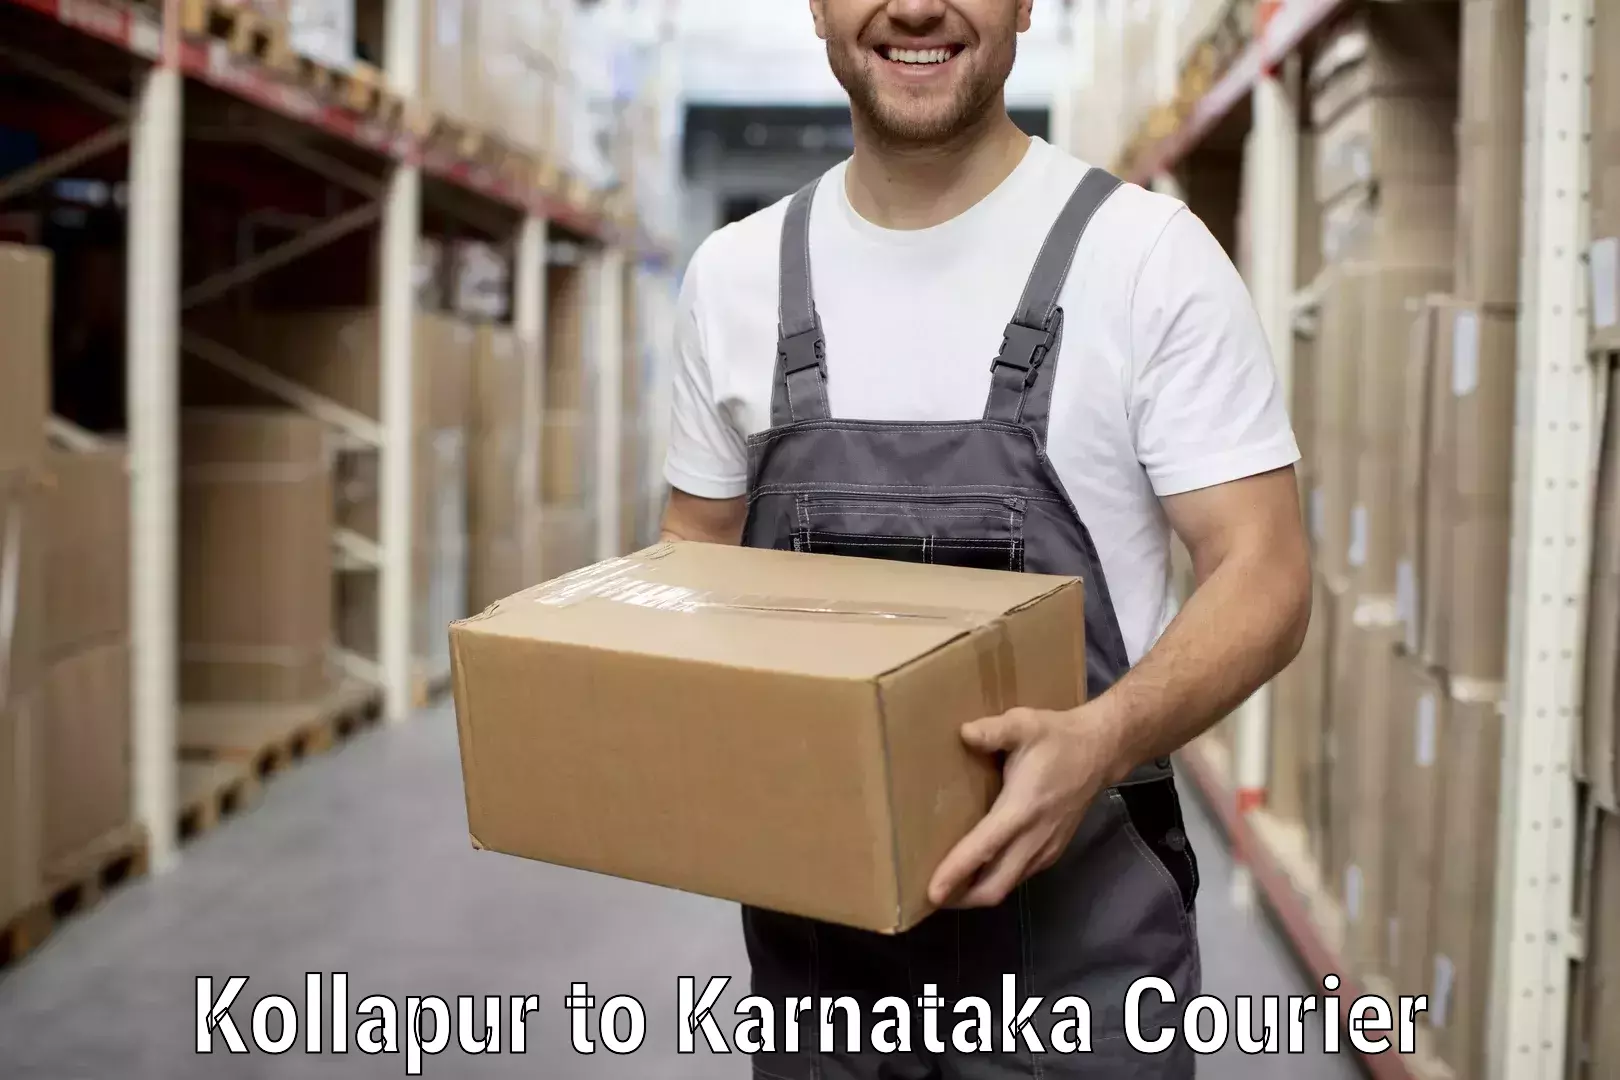 Professional moving assistance Kollapur to Karnataka